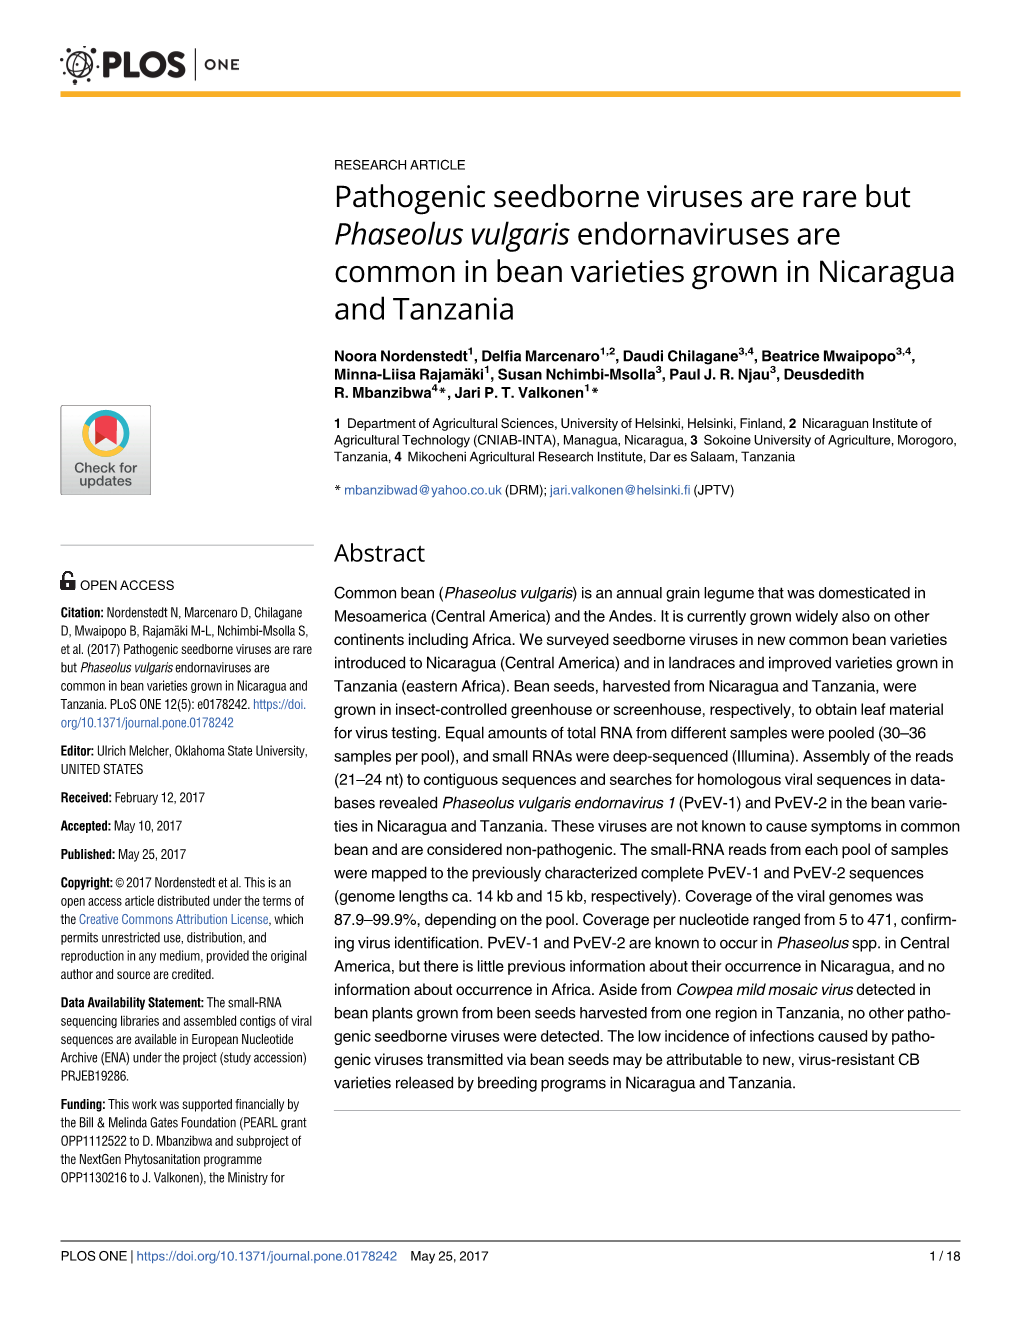 Pathogenic Seedborne Viruses Are Rare but Phaseolus Vulgaris Endornaviruses Are Common in Bean Varieties Grown in Nicaragua and Tanzania